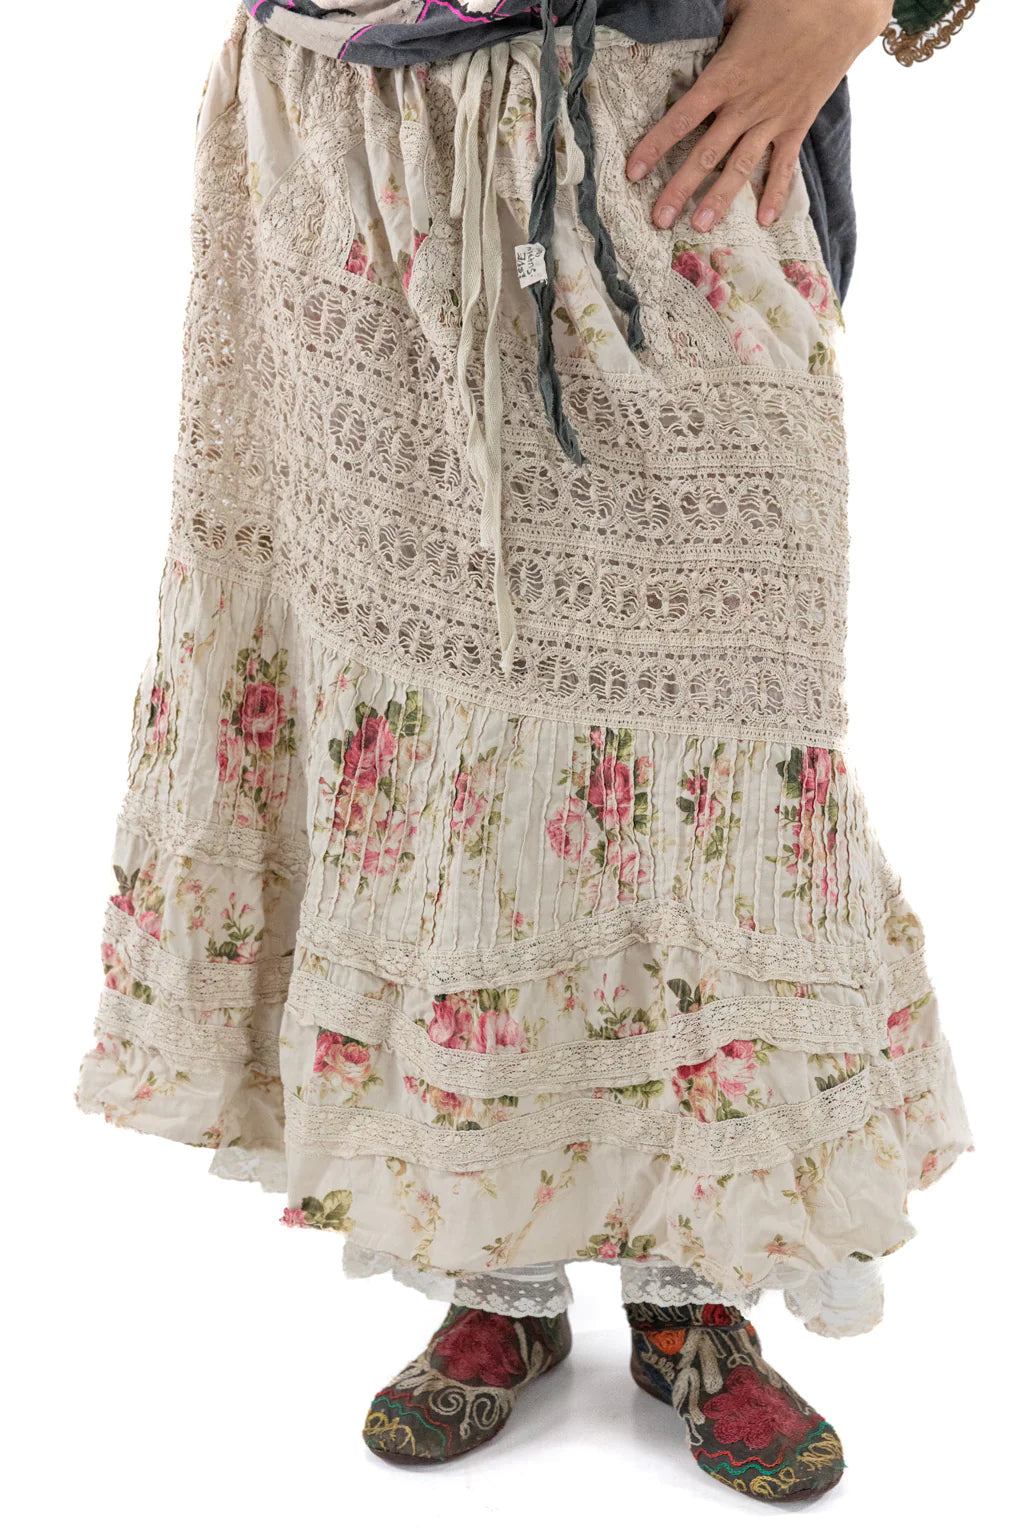 Magnolia Pearl Skirt 130 - Floral Ada Lovelace Skirt - Victoria